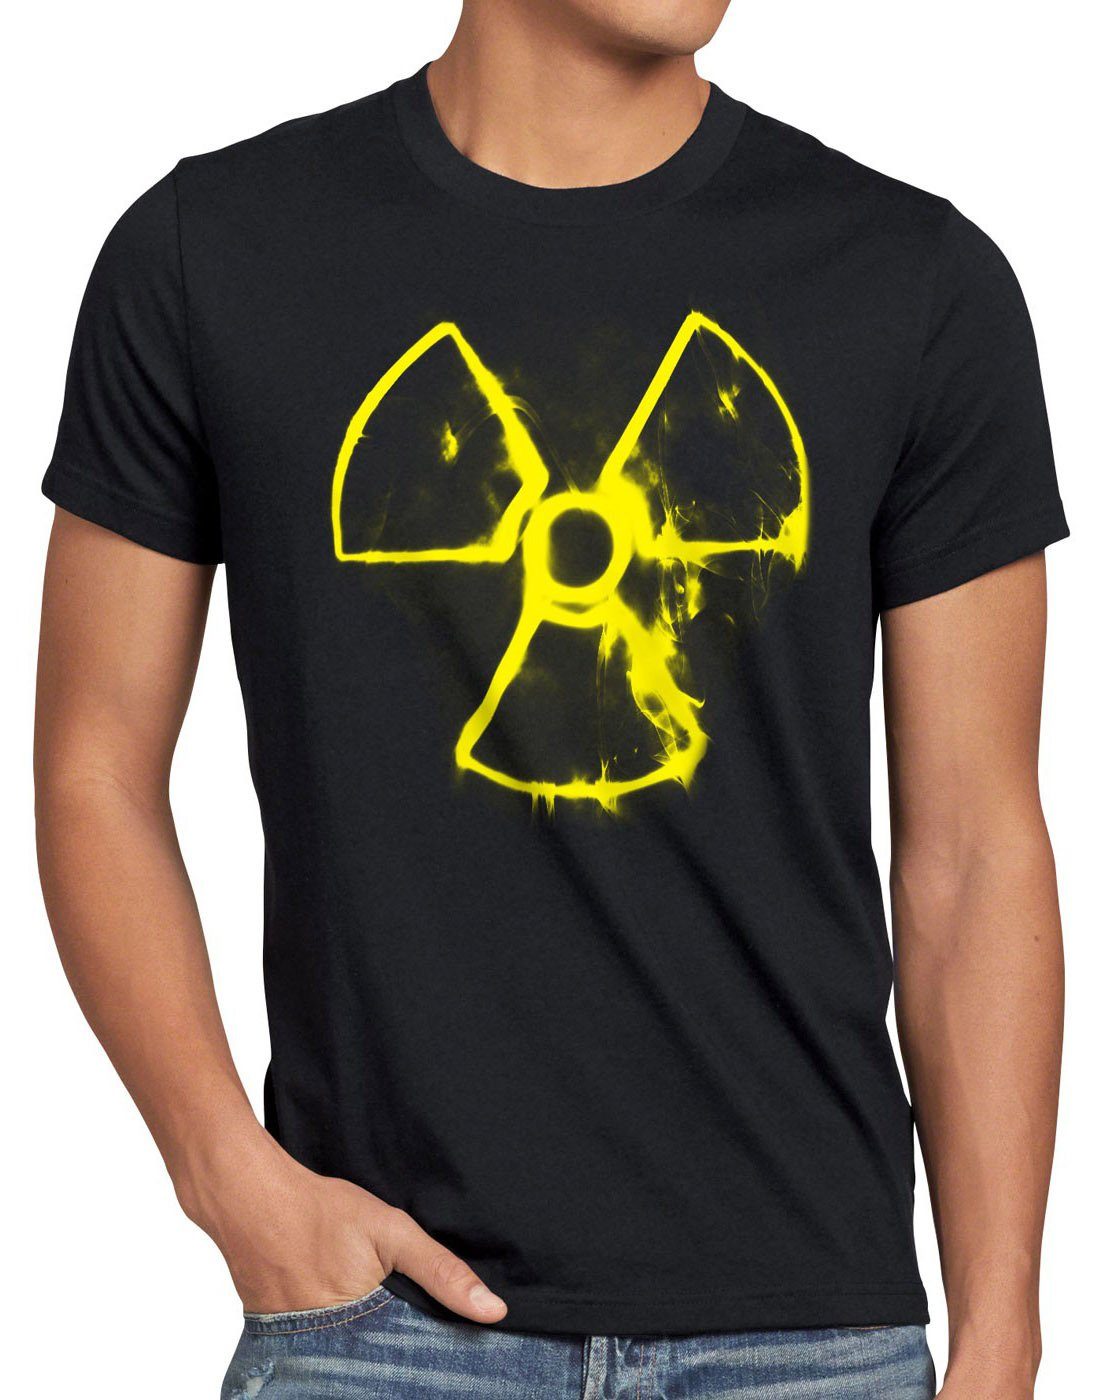 nein Print-Shirt Smoke Nuclear akw Herren T-Shirt danke style3 atomkraft